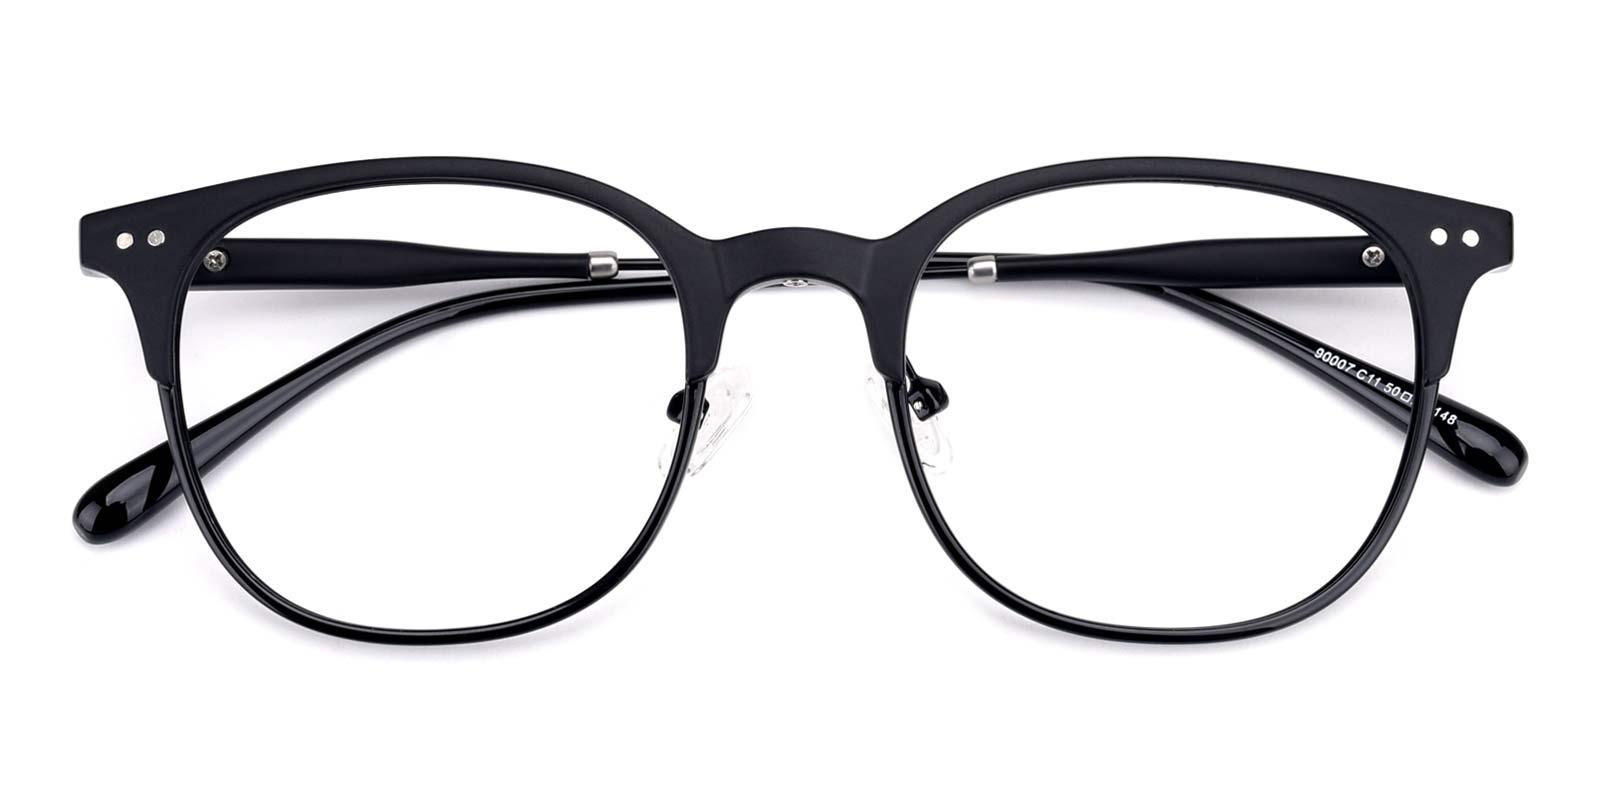 Guide-Black-Square-TR-Eyeglasses-detail